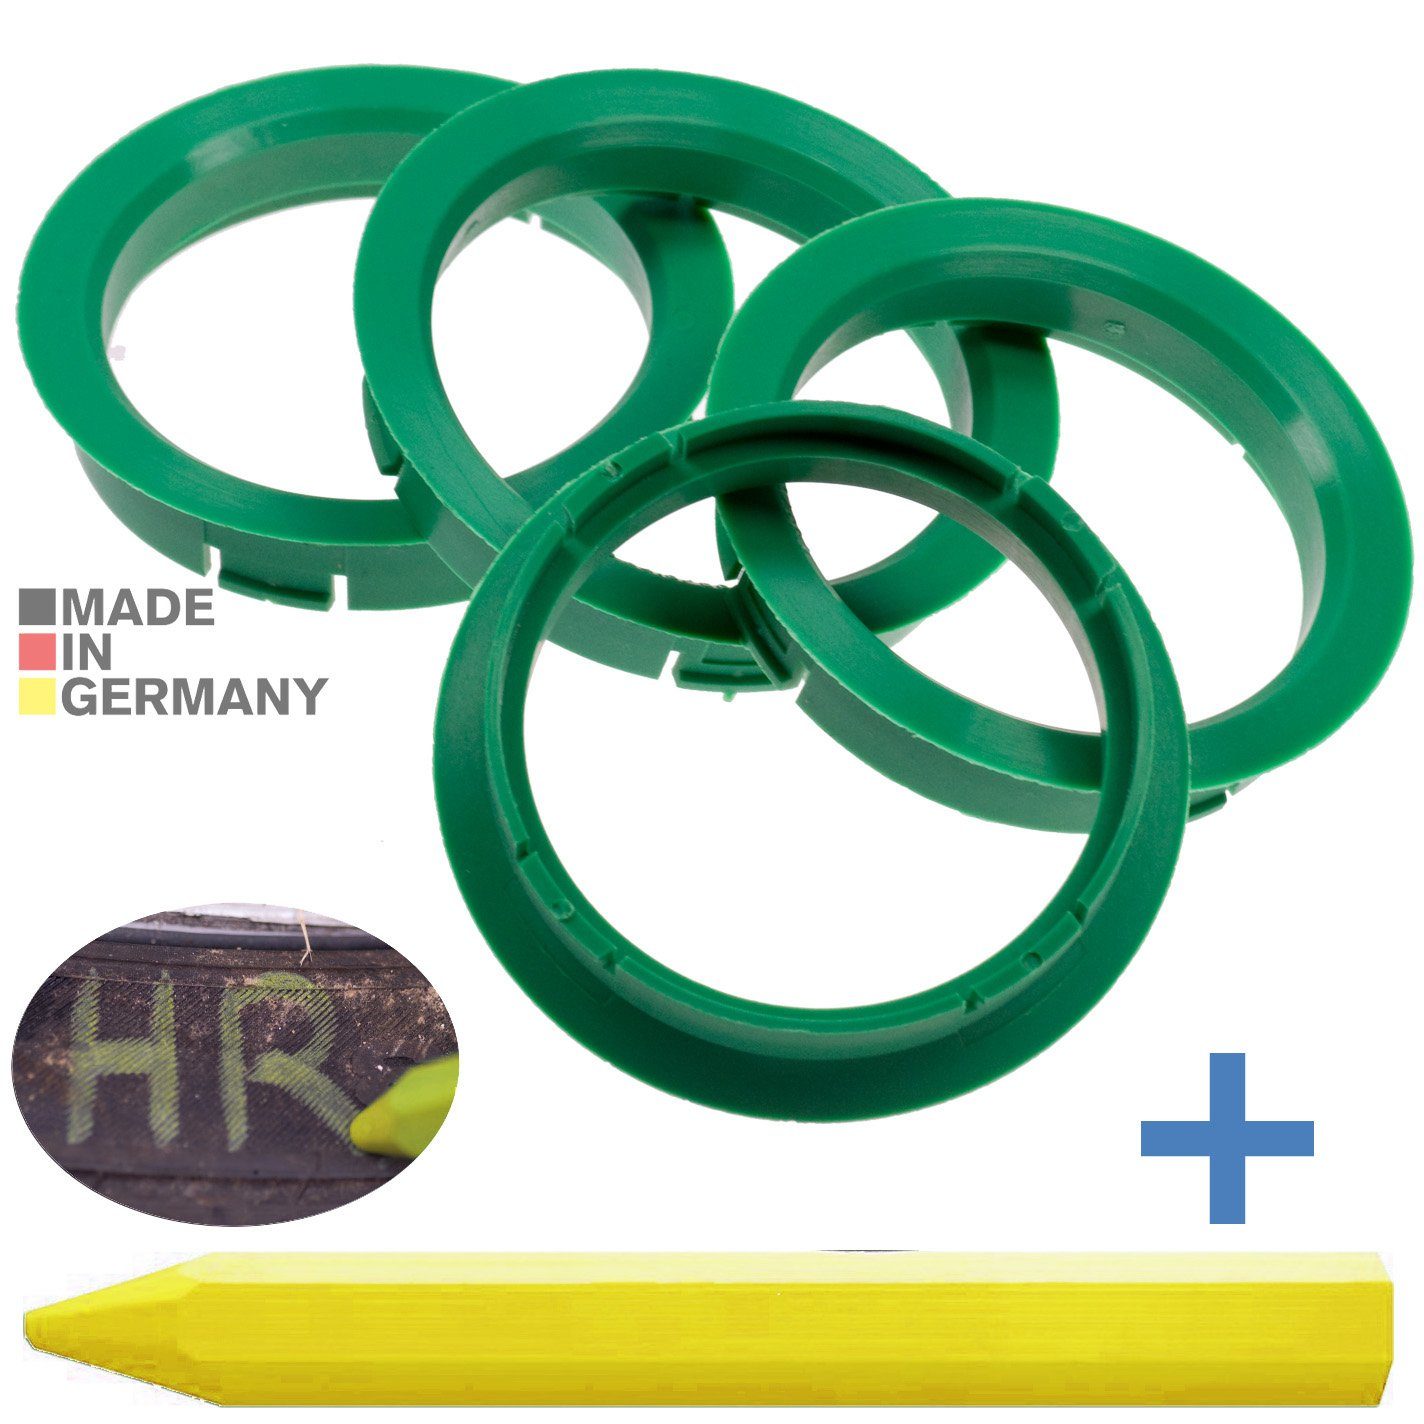 RKC Reifenstift 4X Zentrierringe Grün Felgen Ringe + 1x Reifen Kreide Fett Stift, Maße: 64,0 x 56,1 mm